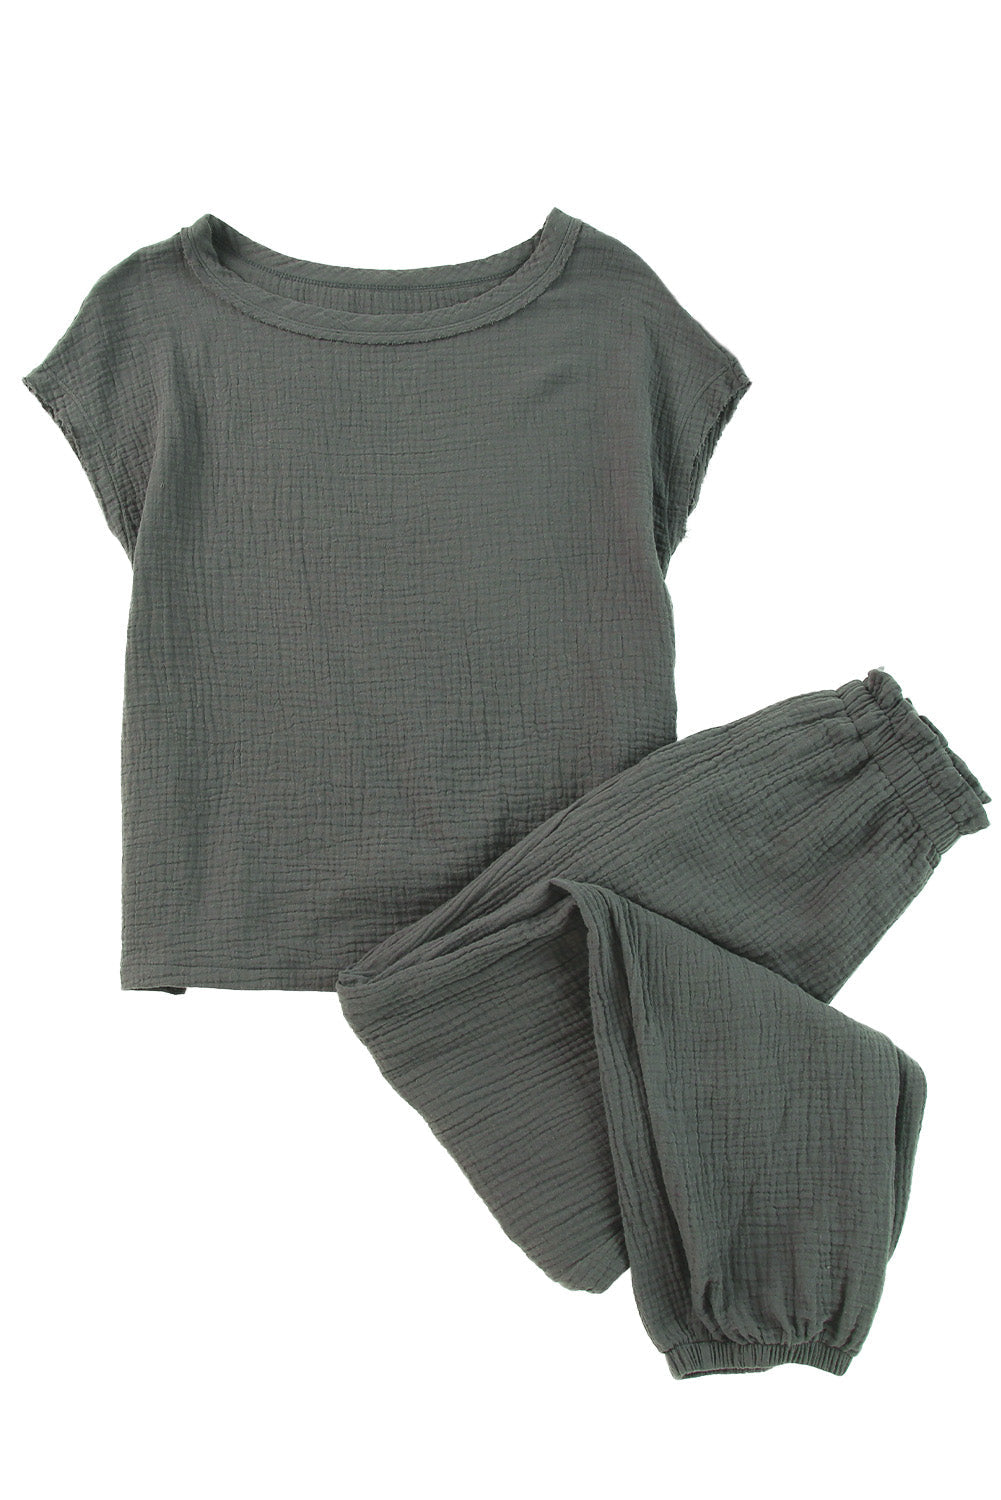 Gray Crinkled Texture Tee and Jogger Pants Set OniTakai